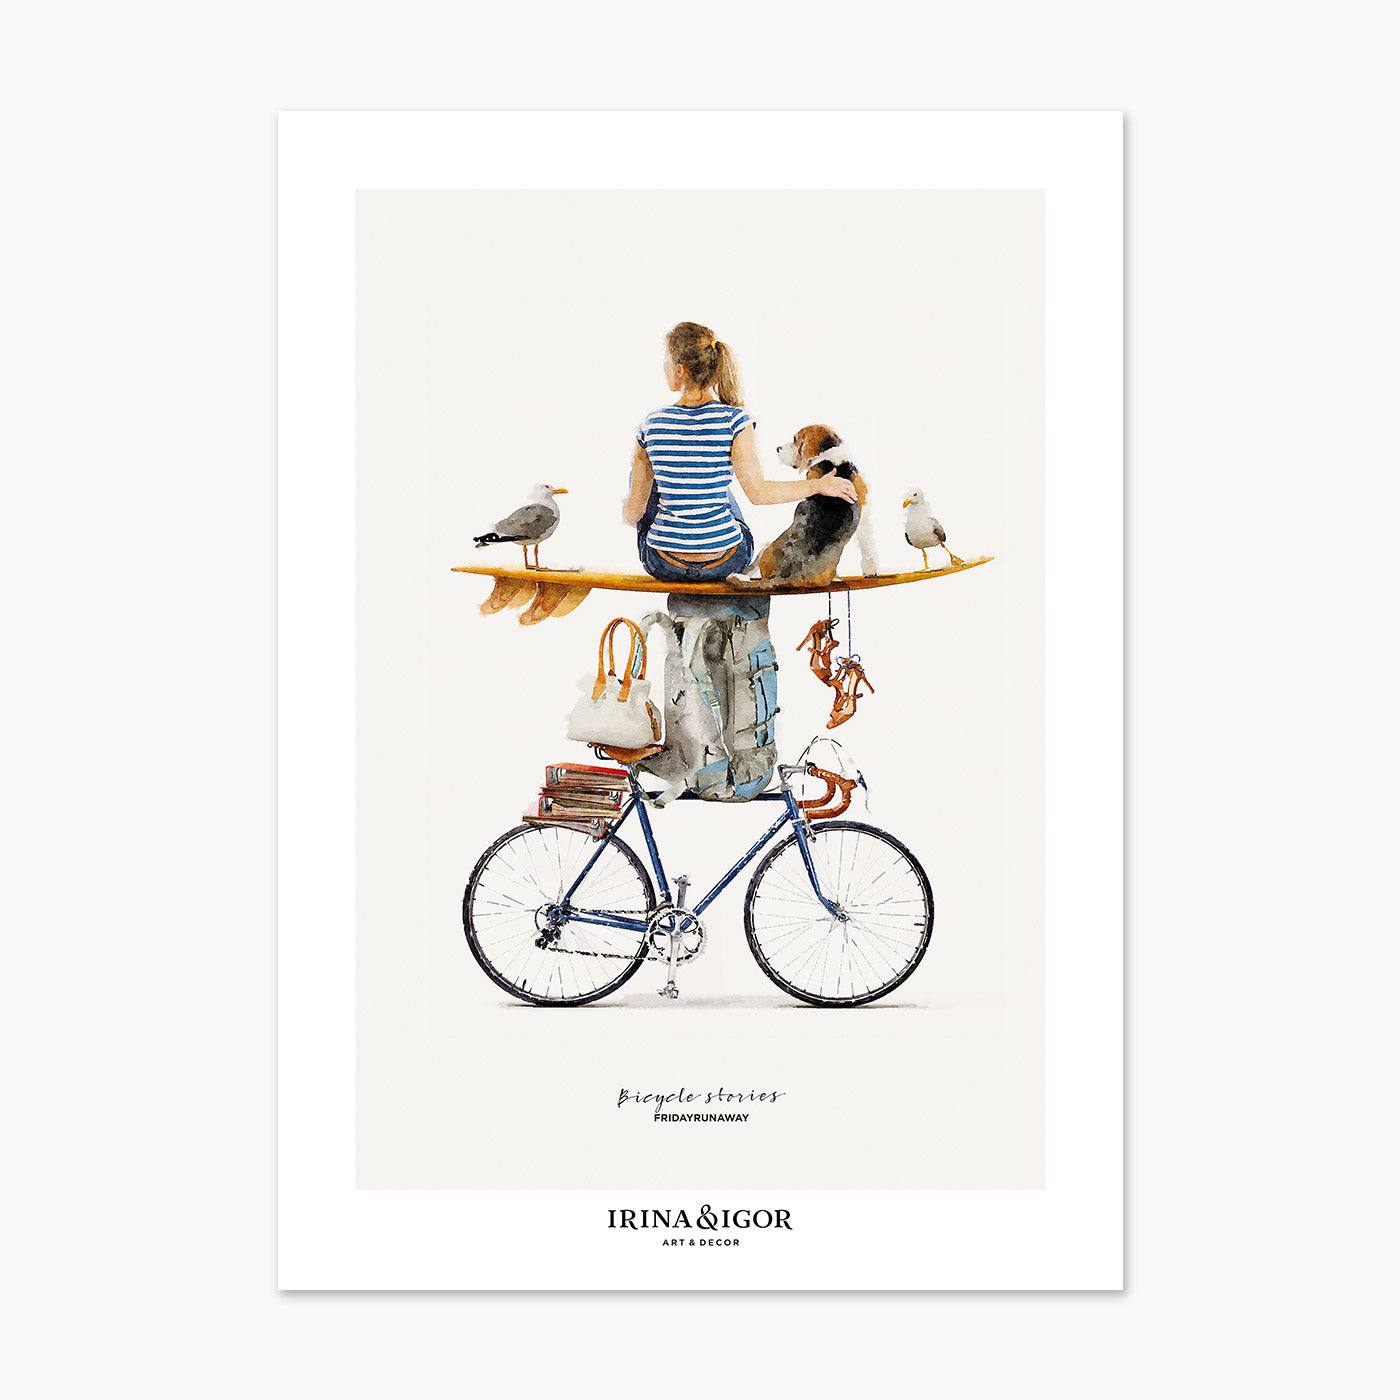 Bicycle stories | Friday Runaway